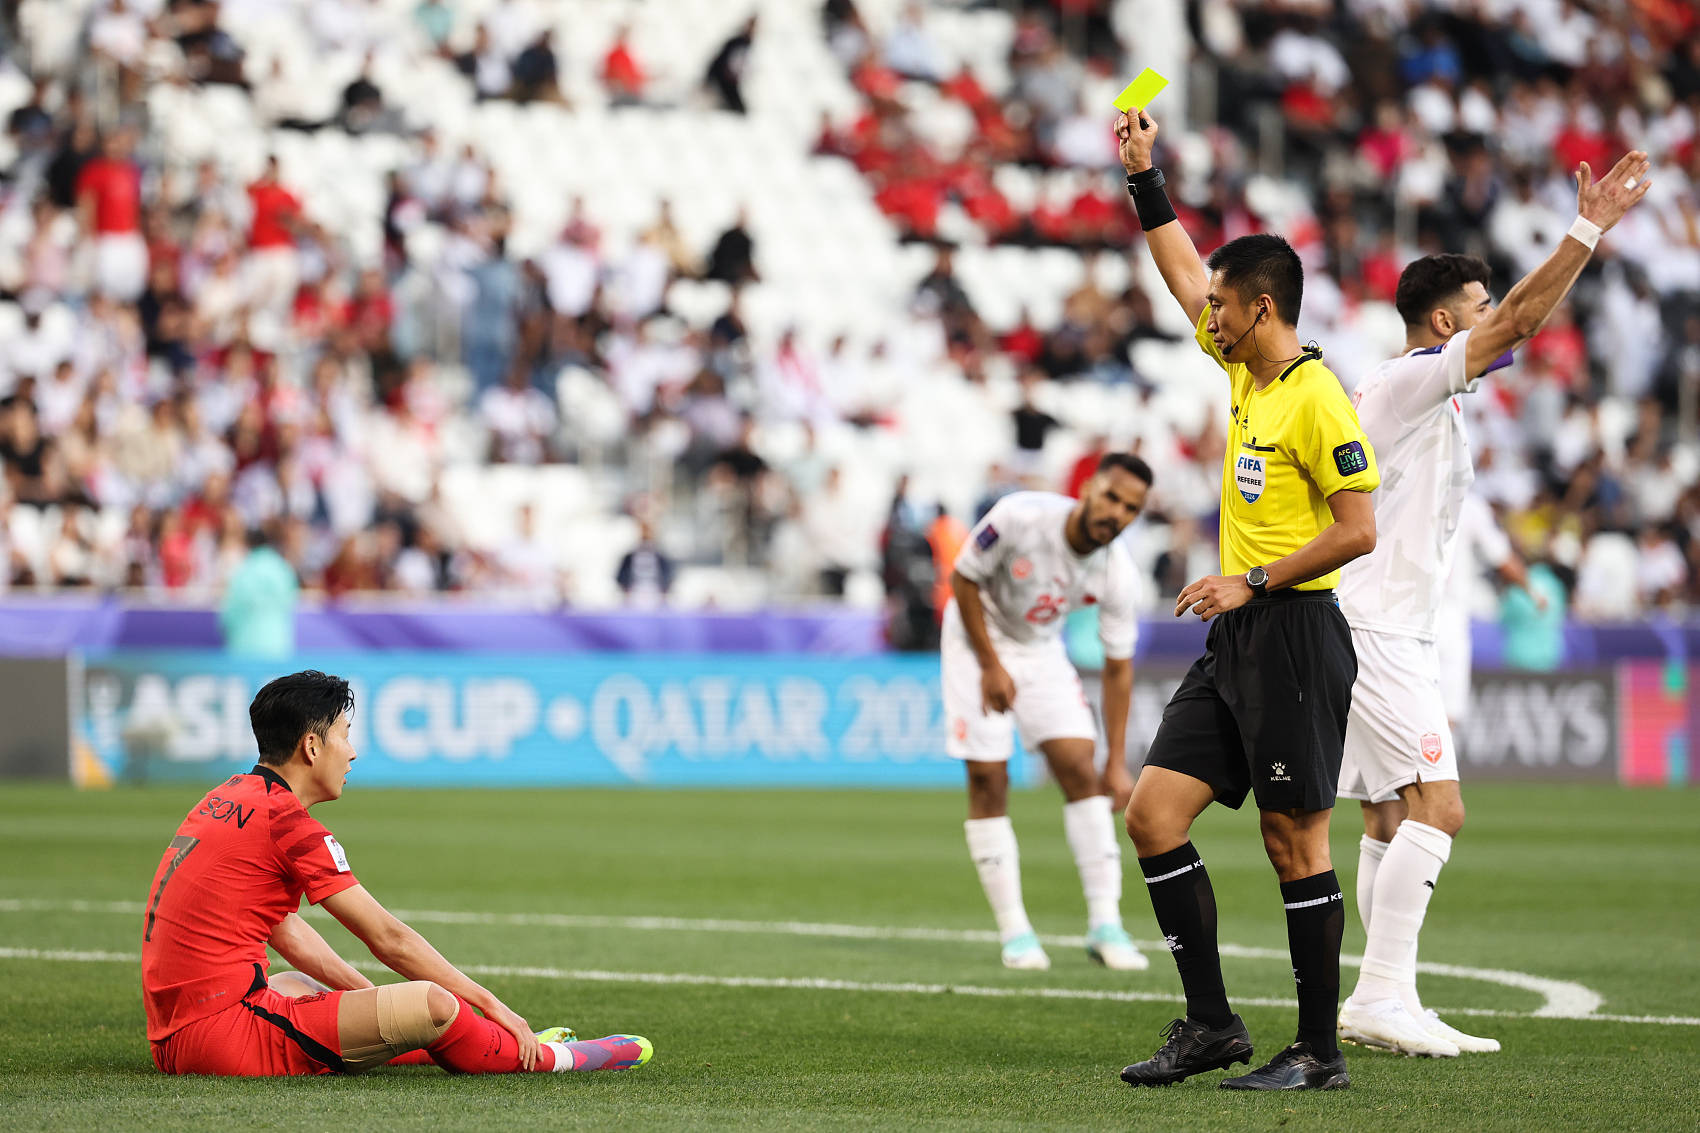 【168sports】中国裁判组将首次执法男足亚洲杯决赛